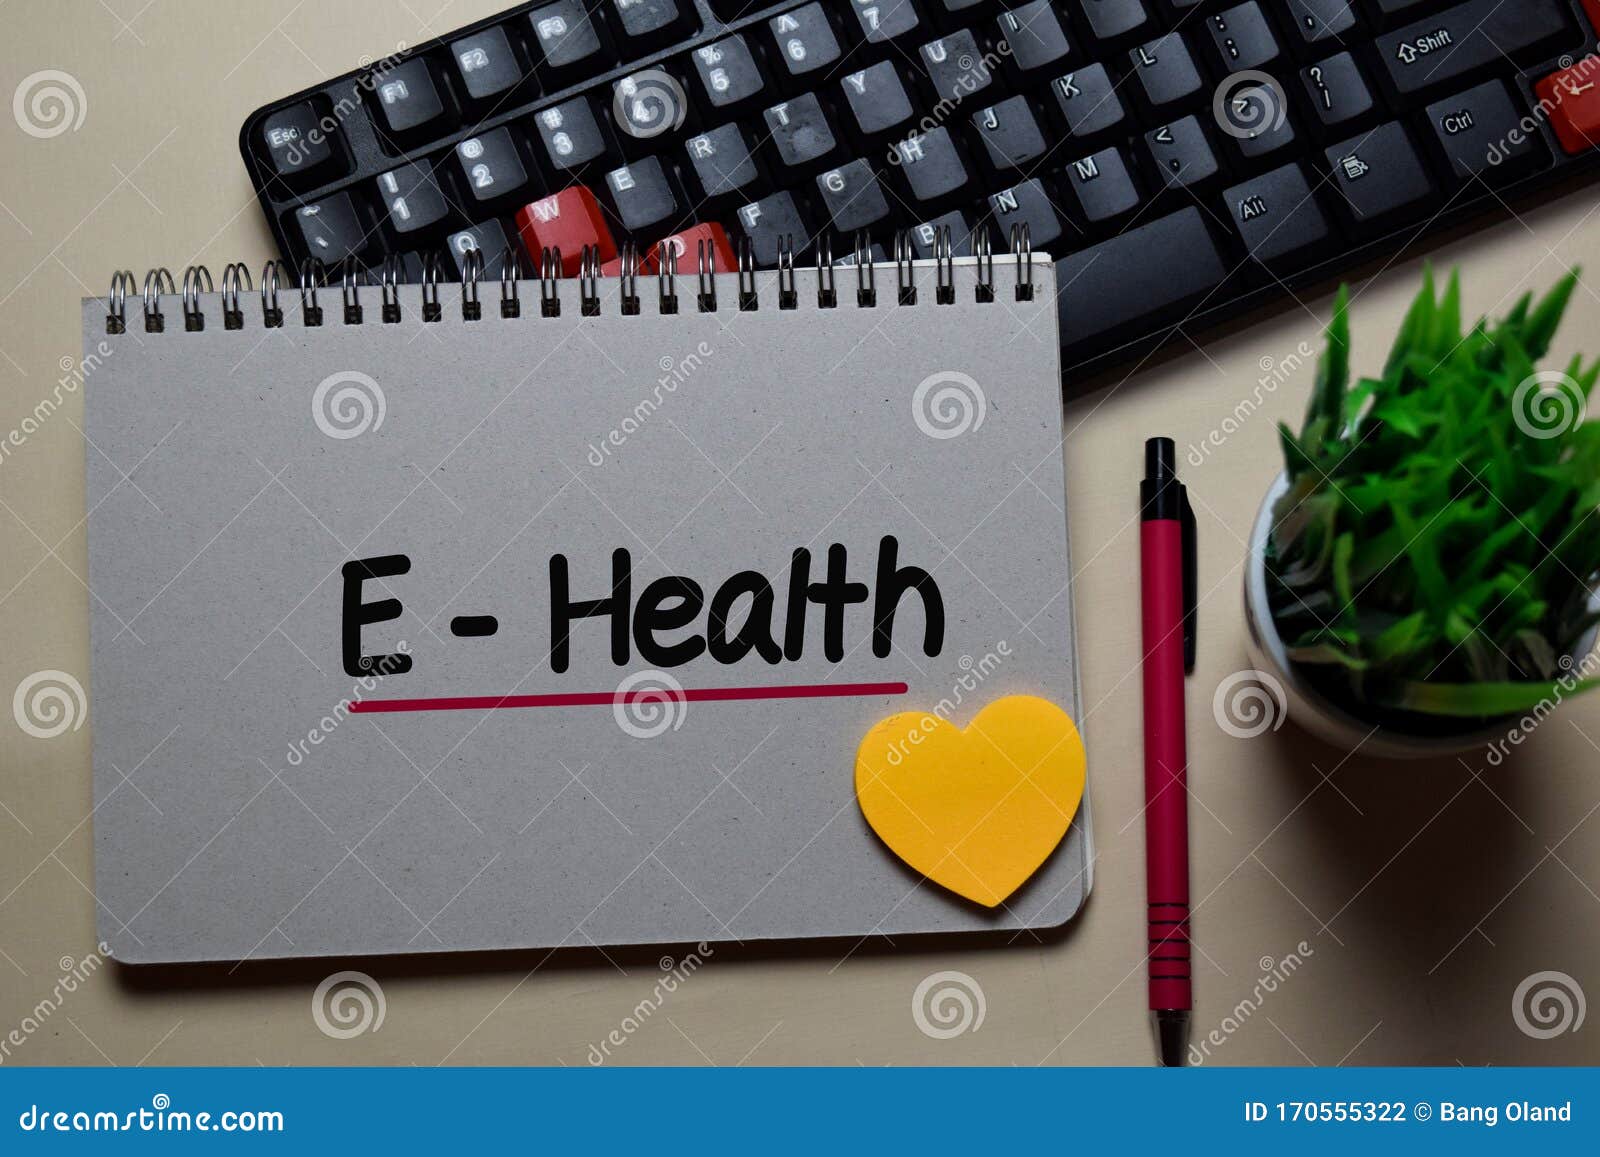 e-health write on a book  on office desk